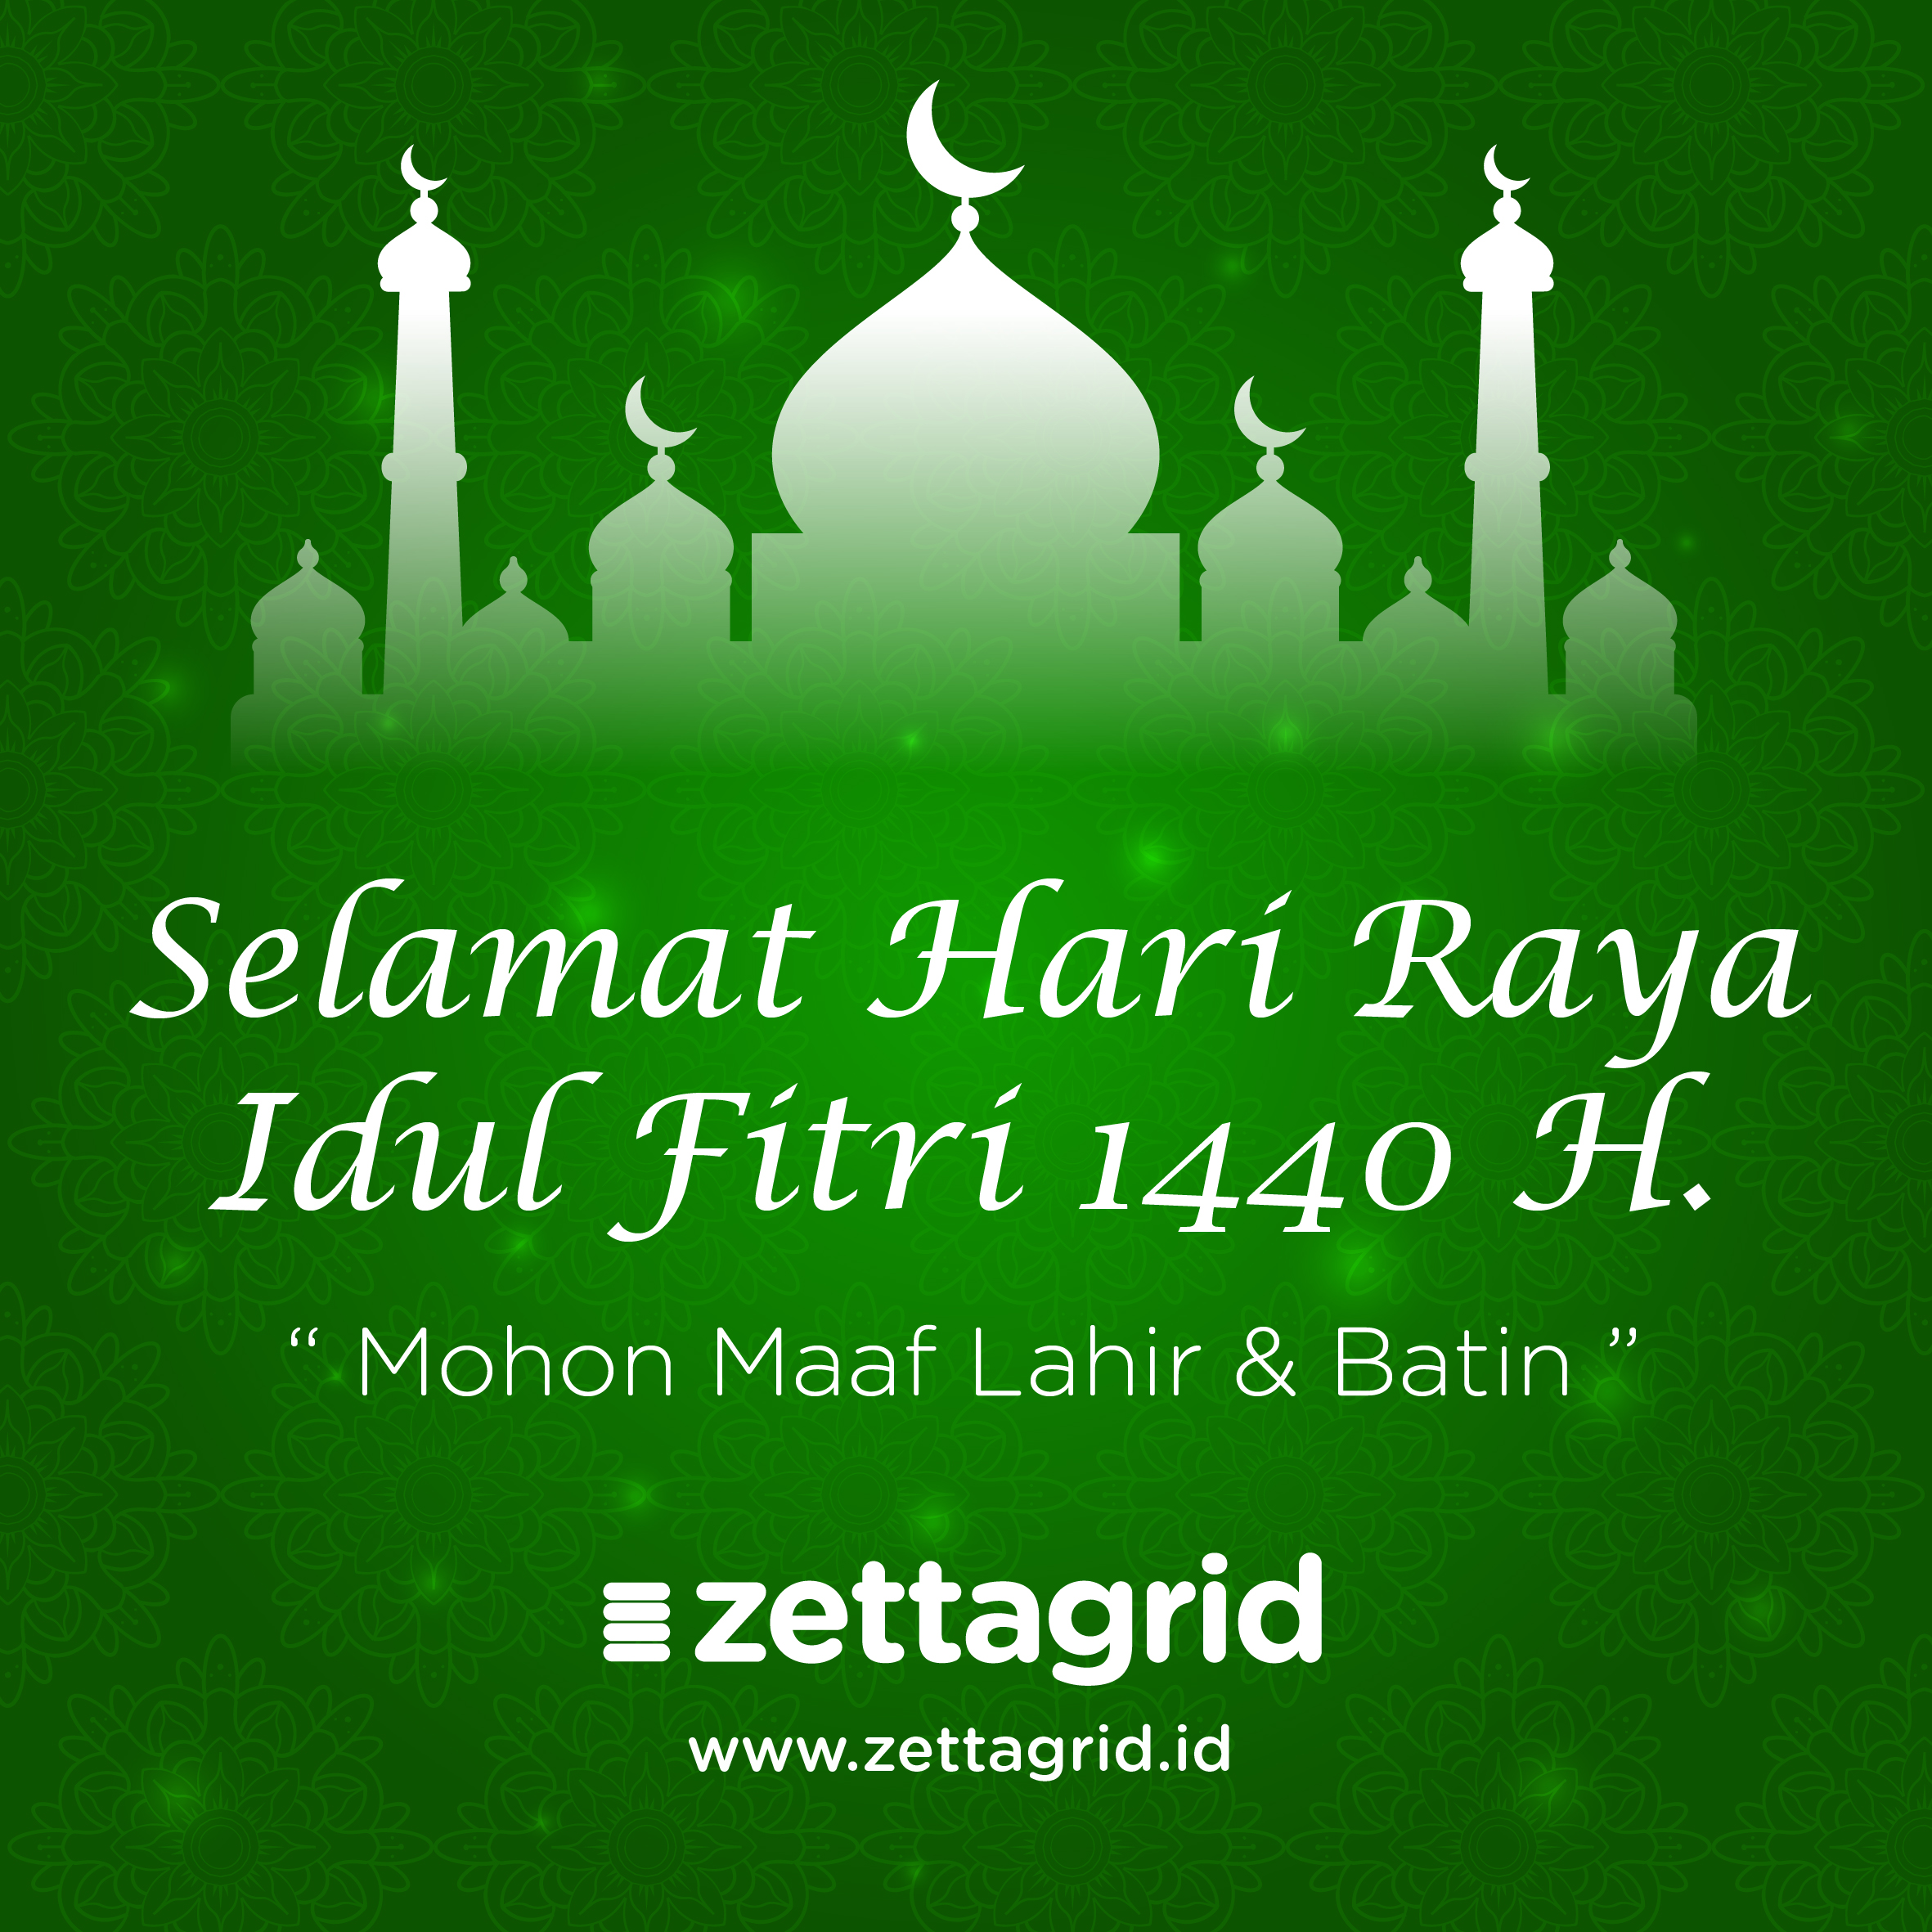  Selamat Hari Raya Idul Fitri  1440 H Zettagrid Indonesia 